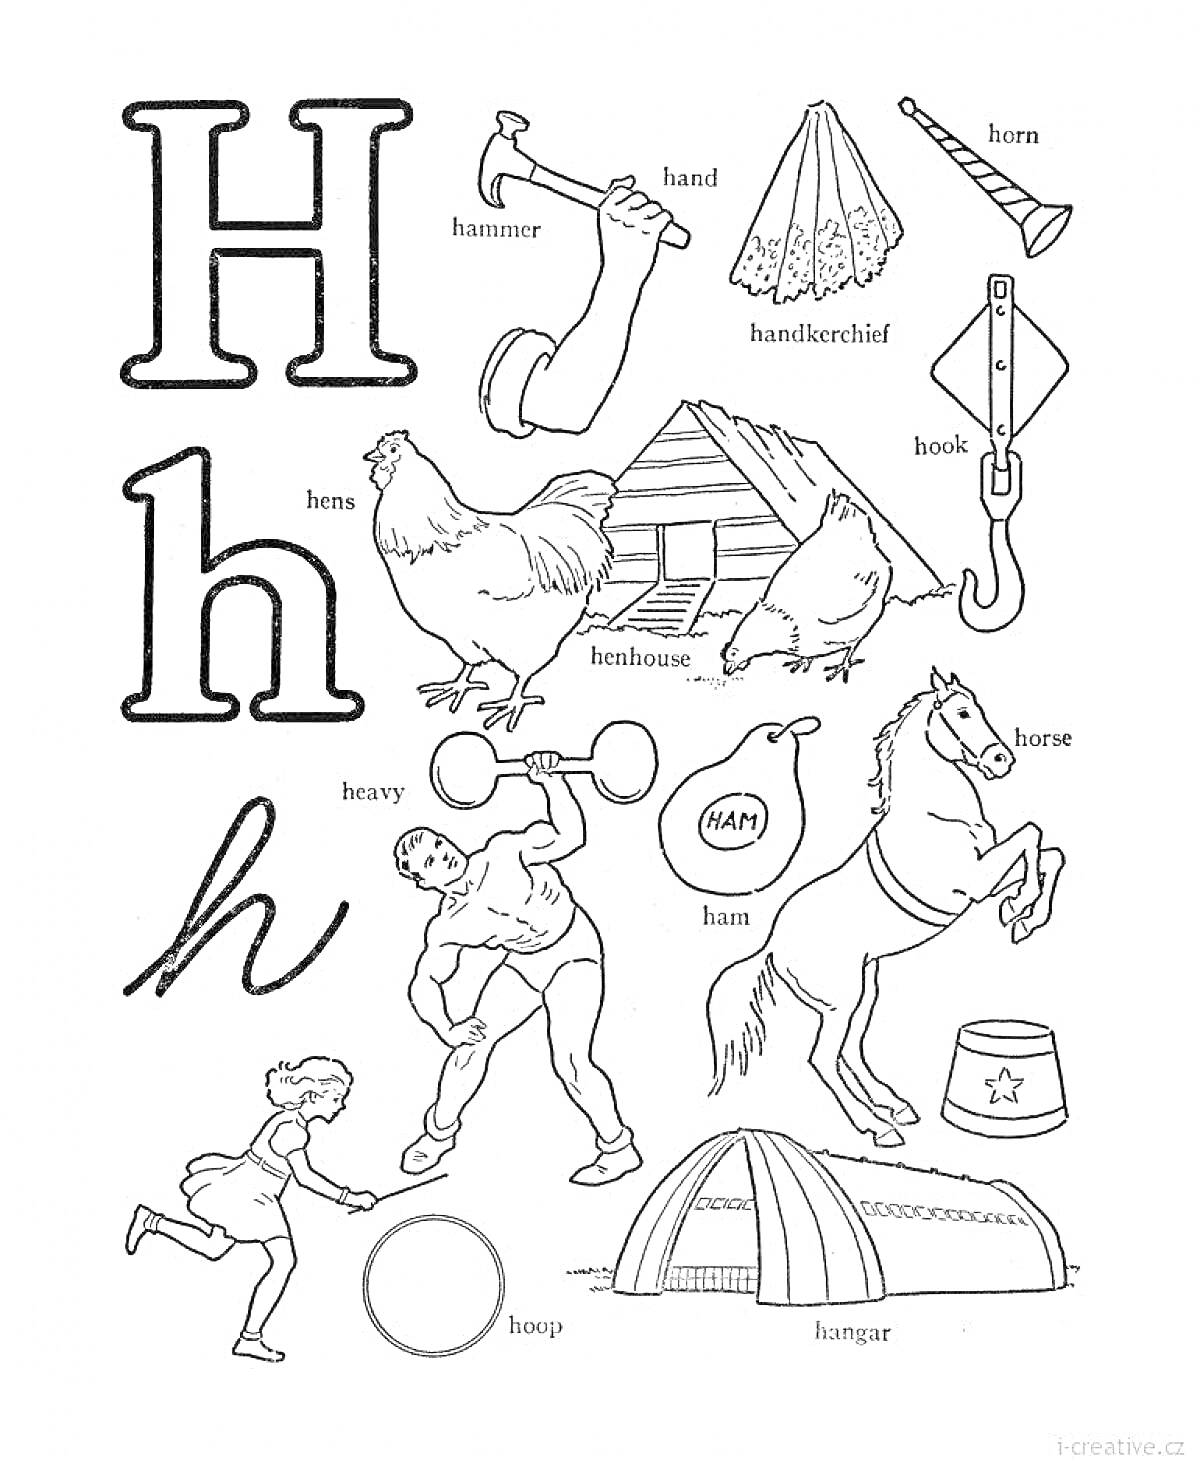 Алфавит. Буква H с иллюстрациями: молоток, рука, платок, рог, курица, курятник, крюк, книга, тяжёлая атлетика, бегун, обруч, цирковой шатёр, бочка, конь на дыбах, ветчина